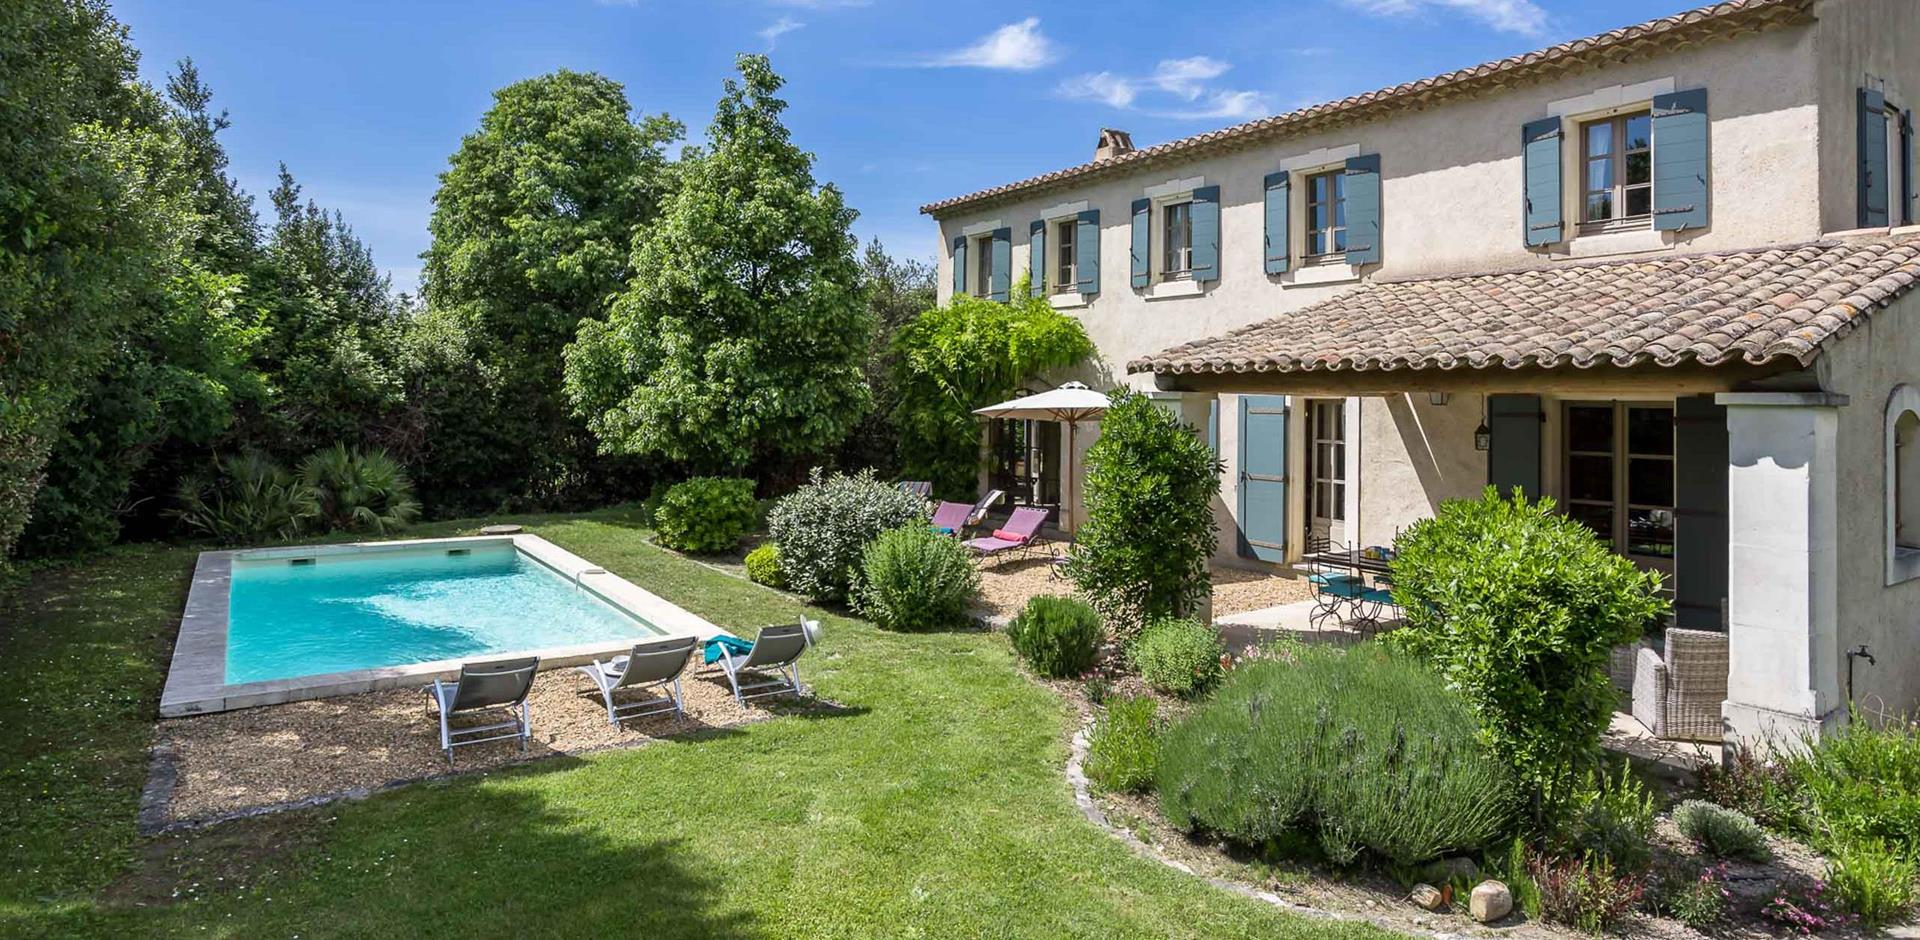 Pool & garden, La Mignonne, Provence